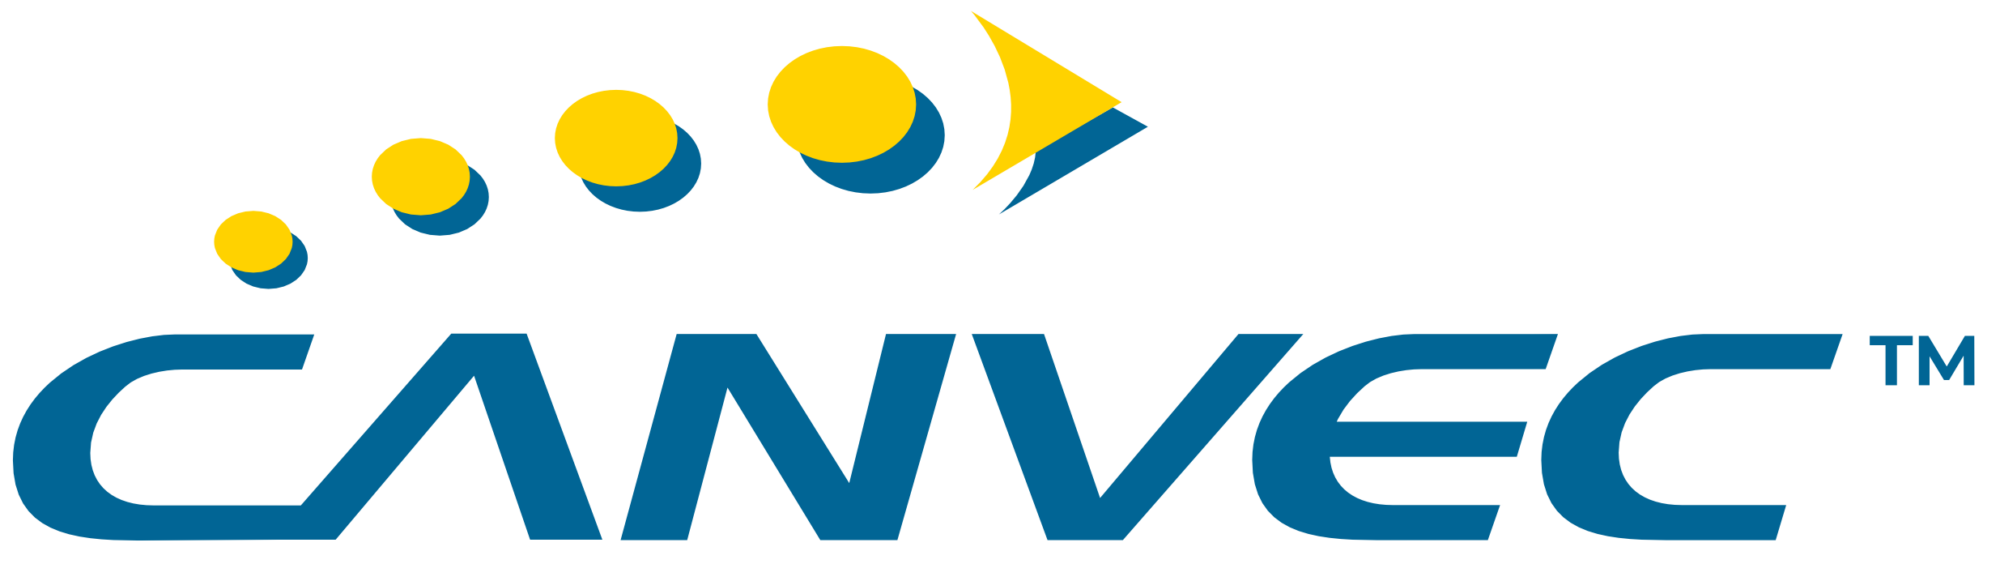 Logo-Canvec-EN